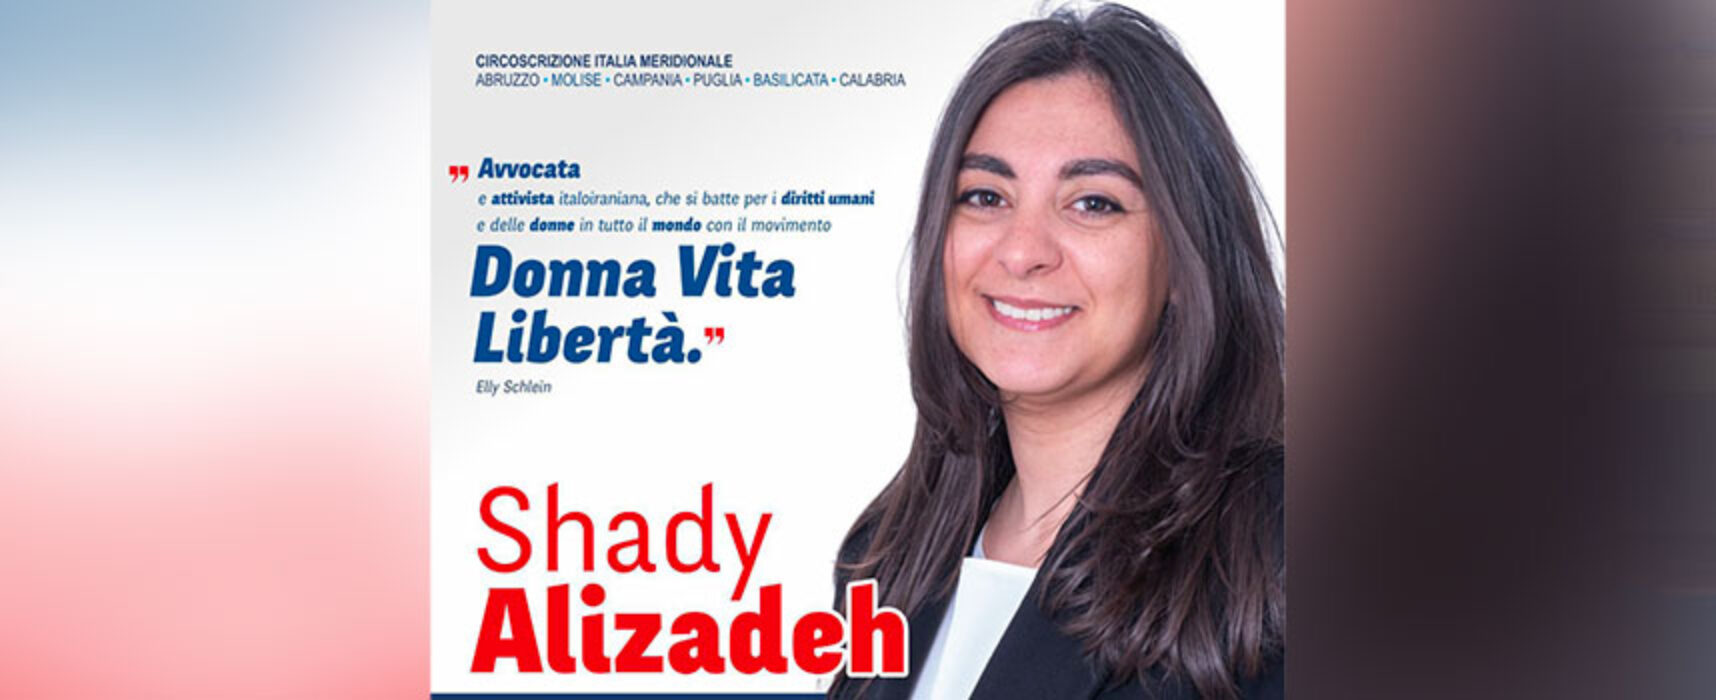 Elezioni europee, PD di Bisceglie ospita la candidata Shady Alizadeh